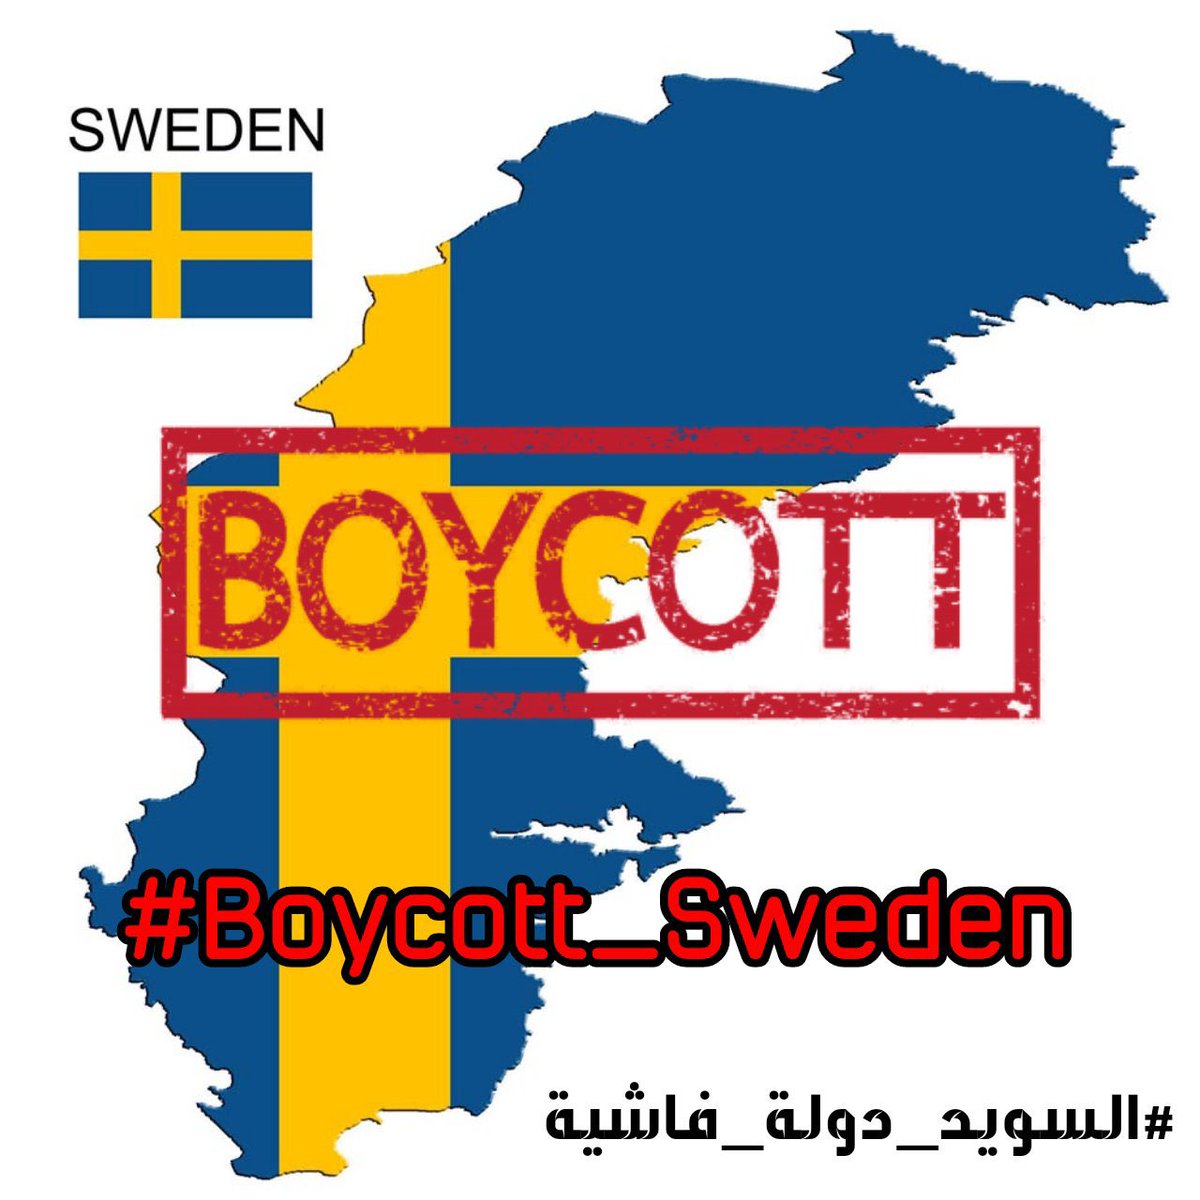 This is not a freedom of expression, this is provocation and rudeness...
#boycottsweden 
#BoycottSwedishProducts 
#Sweden_kidnaps_children
#Sweden
#السويد
#أوقفوا_خطف_أطفالنا
#السويد_تخطف_أطفال_المسلمين
#مقاطعة_المنتجات_السويدية
#غضبة_مليارية_على_حرق_المصحف